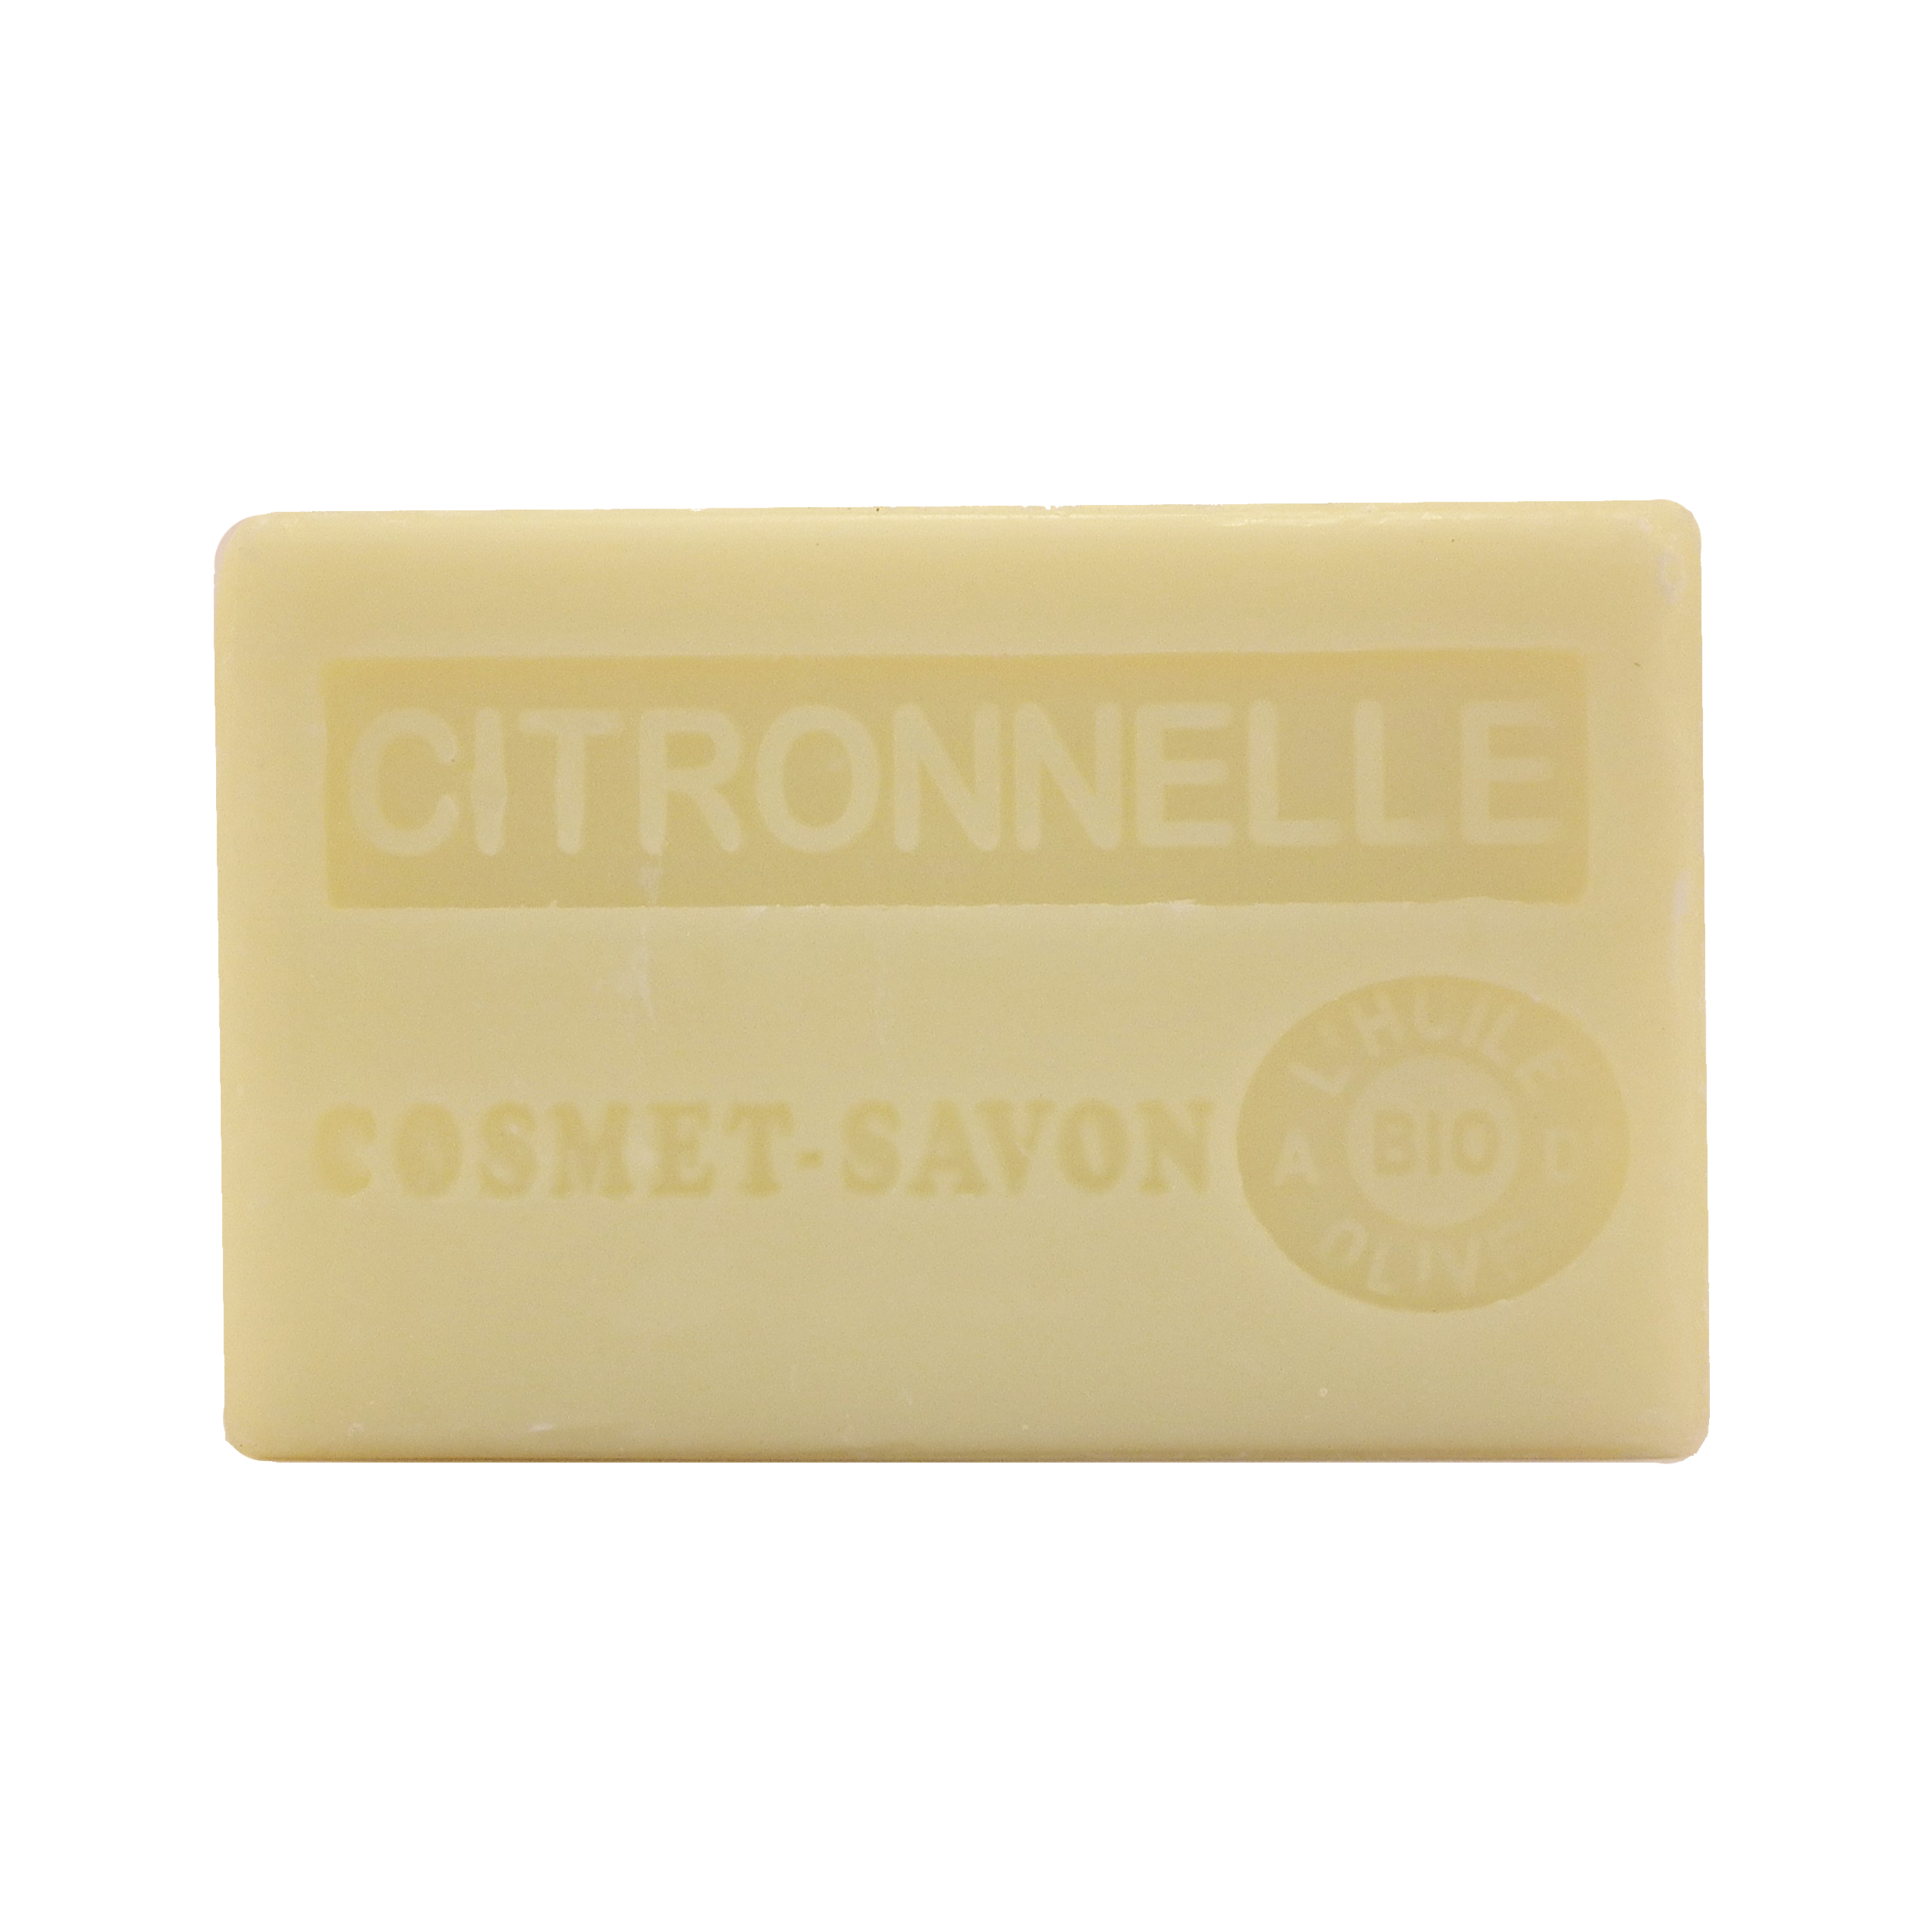 citronnelle-savon-125gr-au-beurre-de-karite-bio-cosmet-savon-3665205006232-face-JPEG